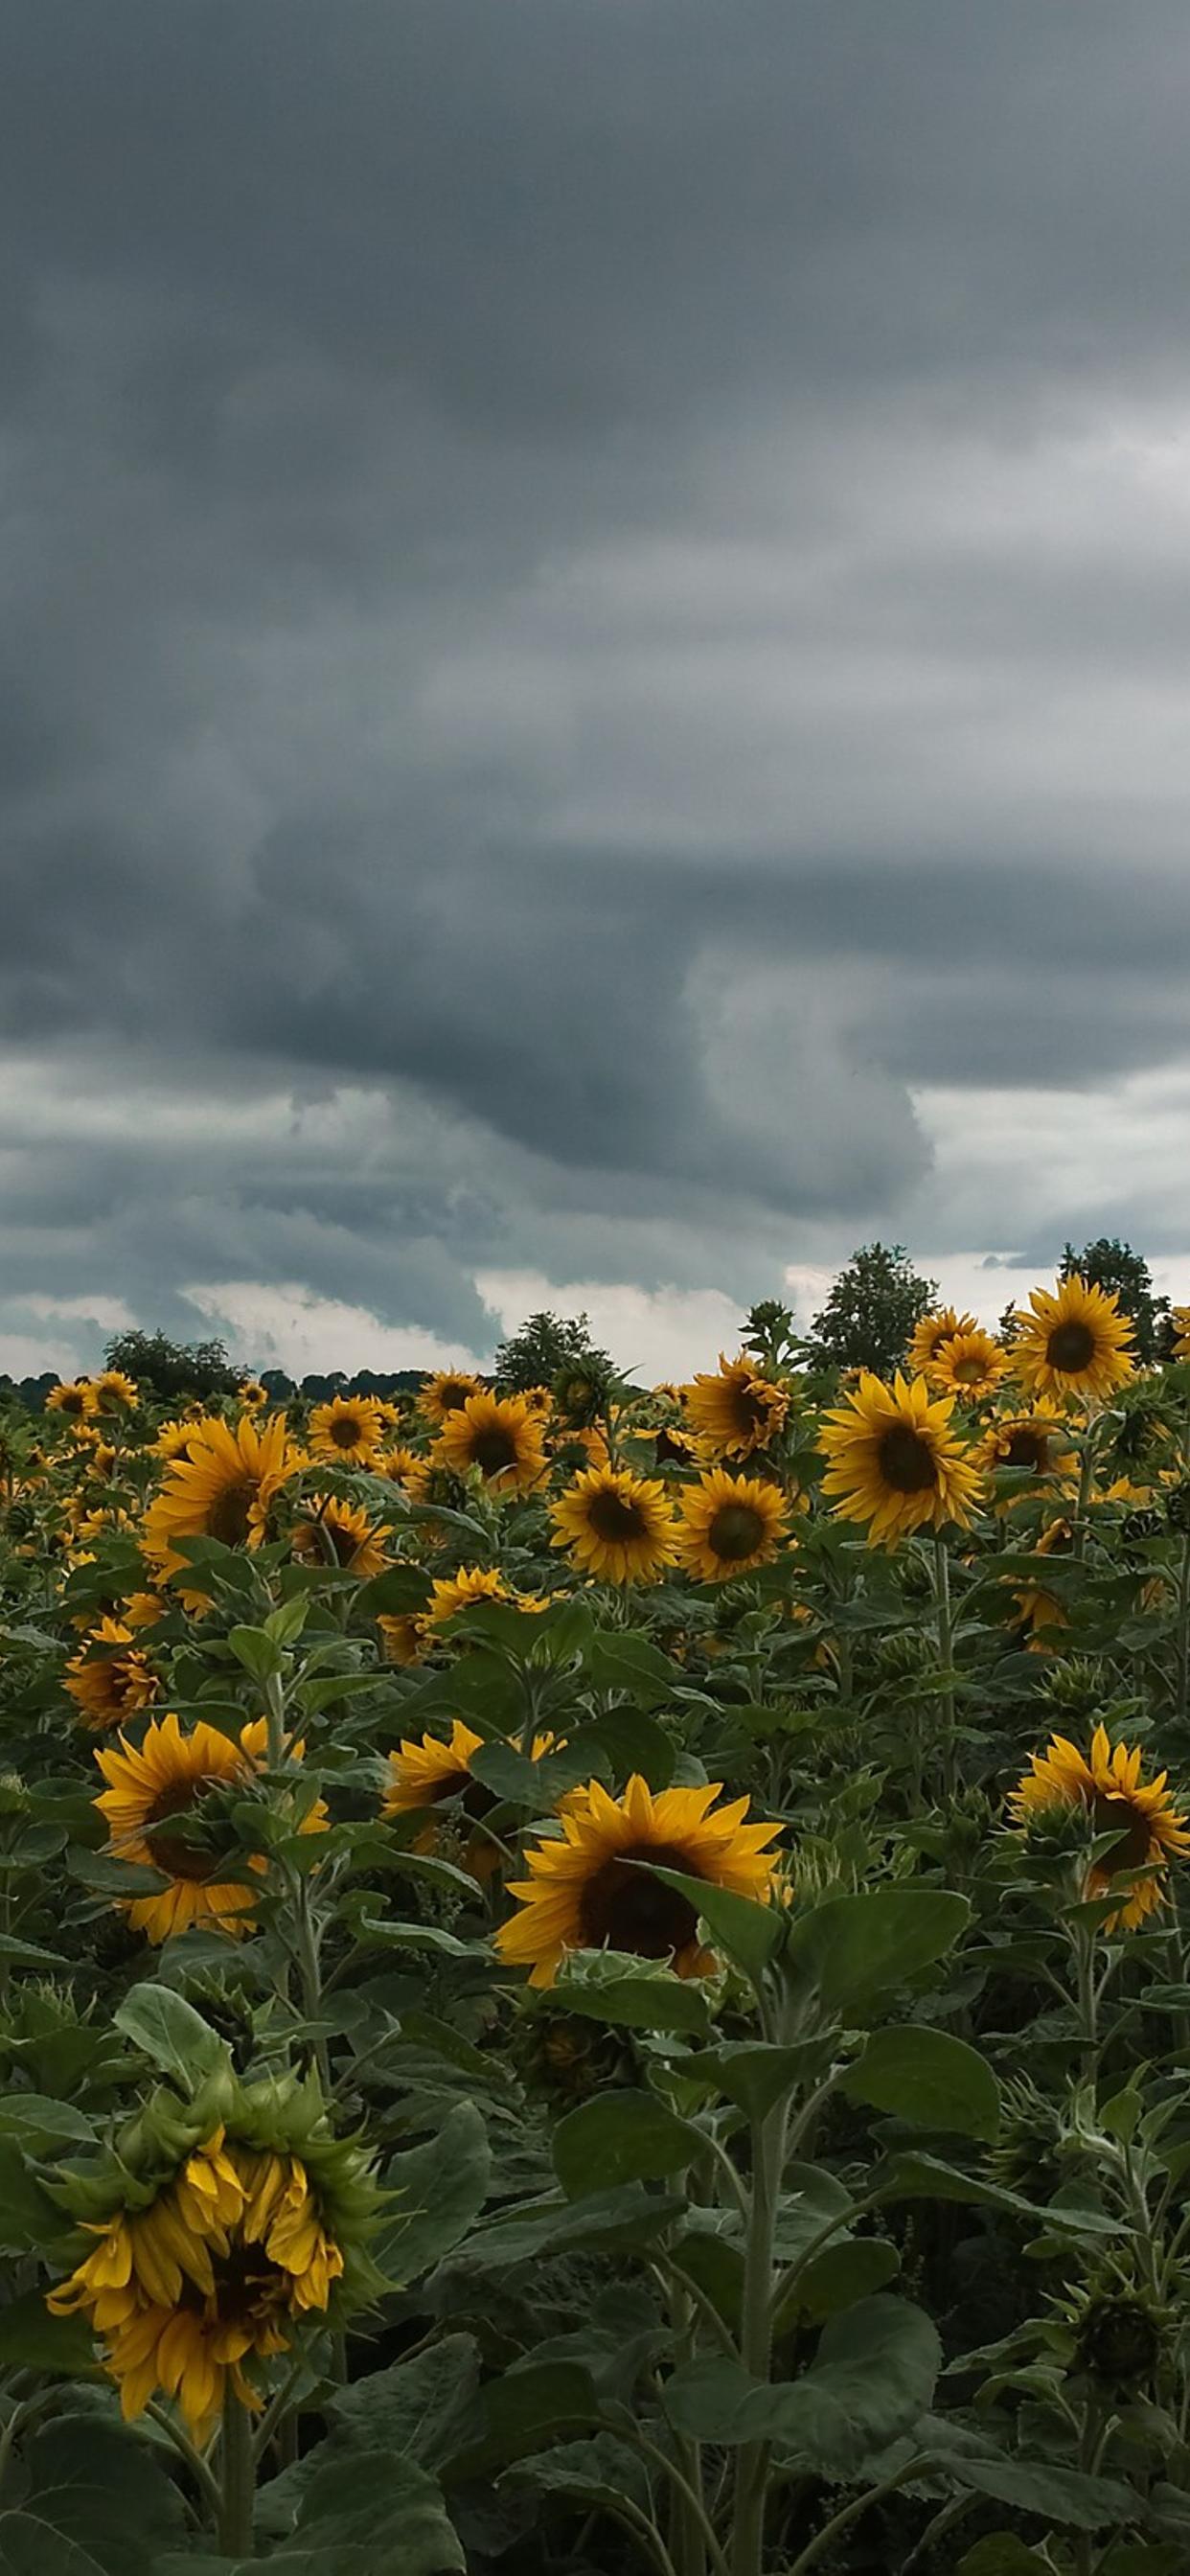 A field of sunflowers under an ominous sky - Farm